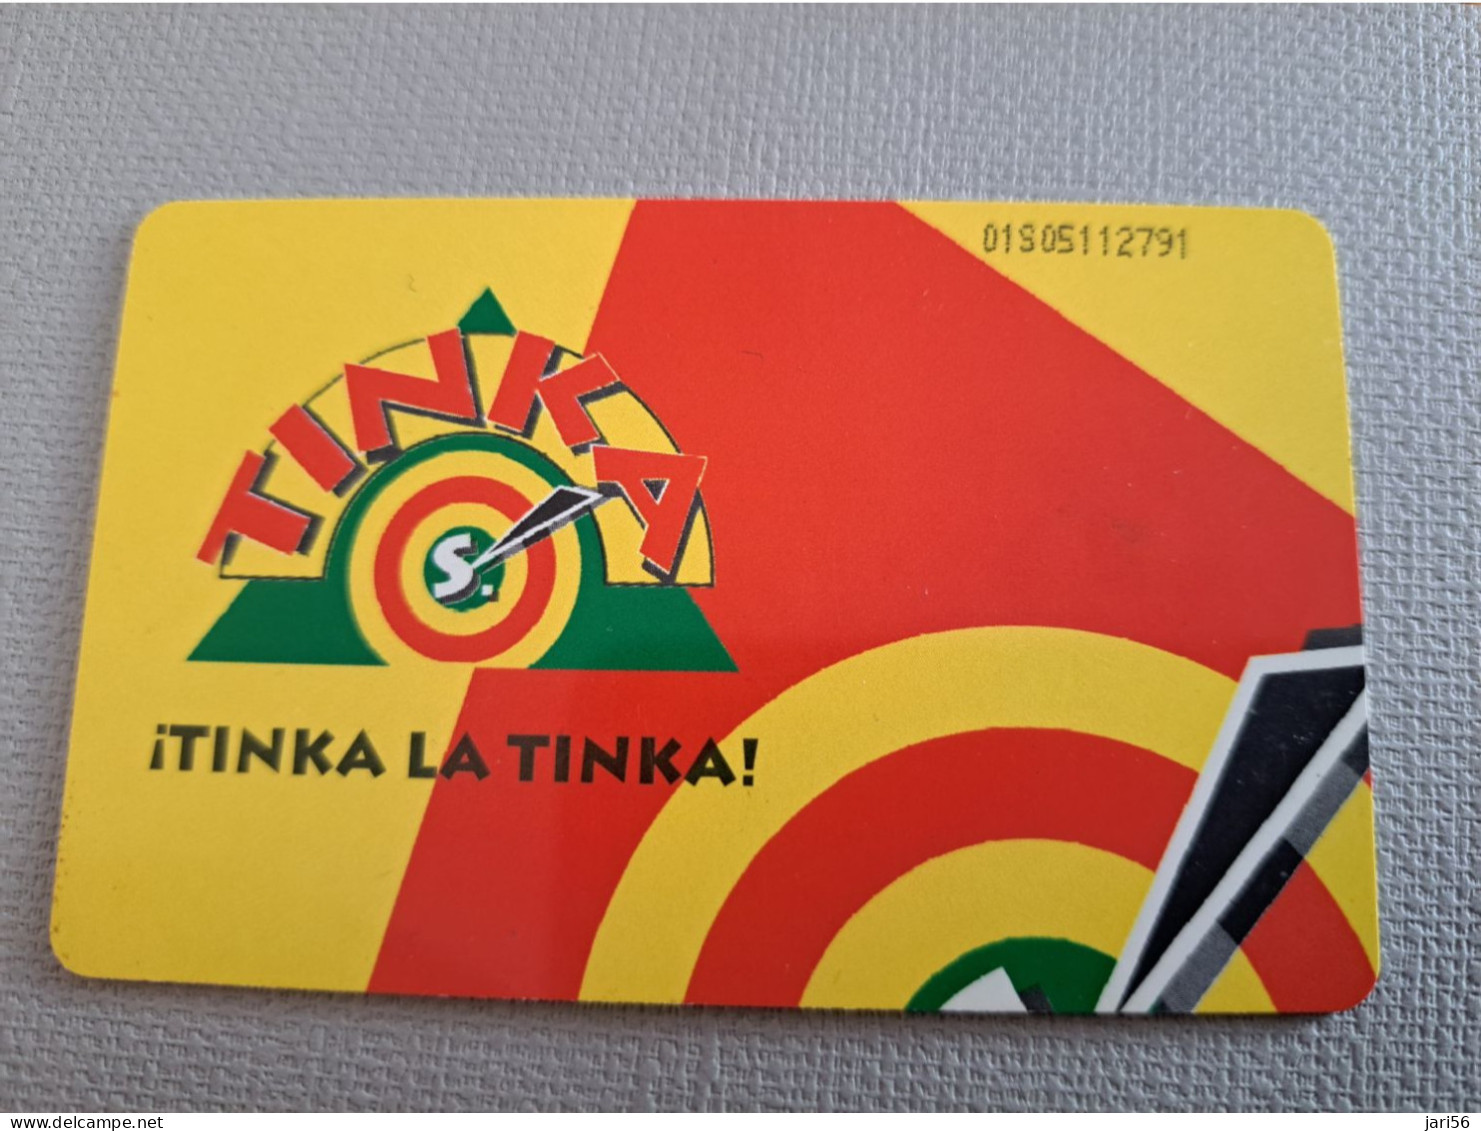 PERU   CHIPCARD   5,00 $ / TINKA LA TINKA/ NICE LADY IN COSTUME     Fine Used Card  ** 15130** - Peru